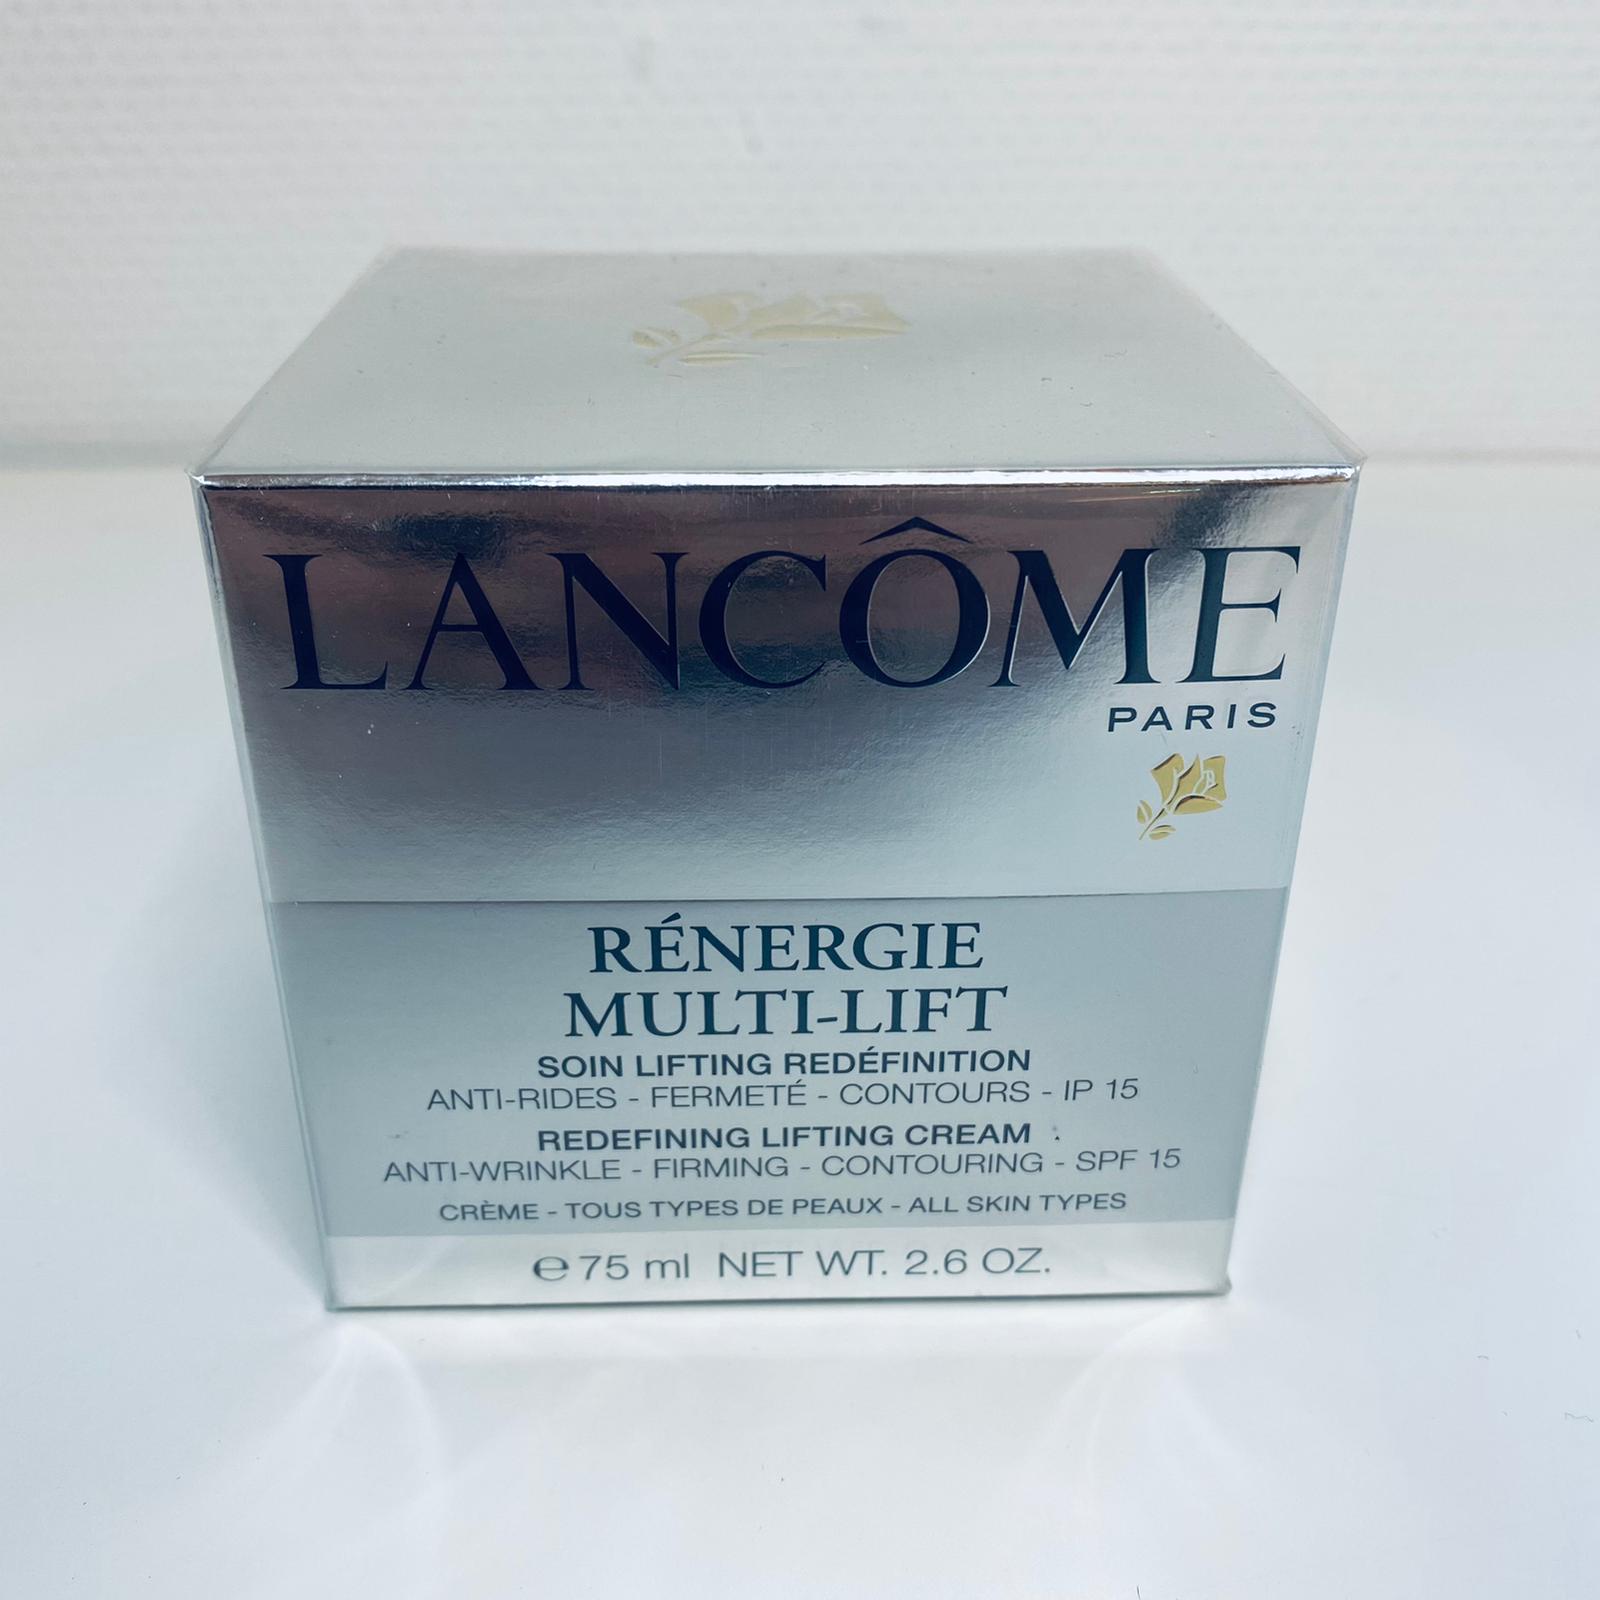 Lancome Renergie Multi Lift all skin types 75 ml